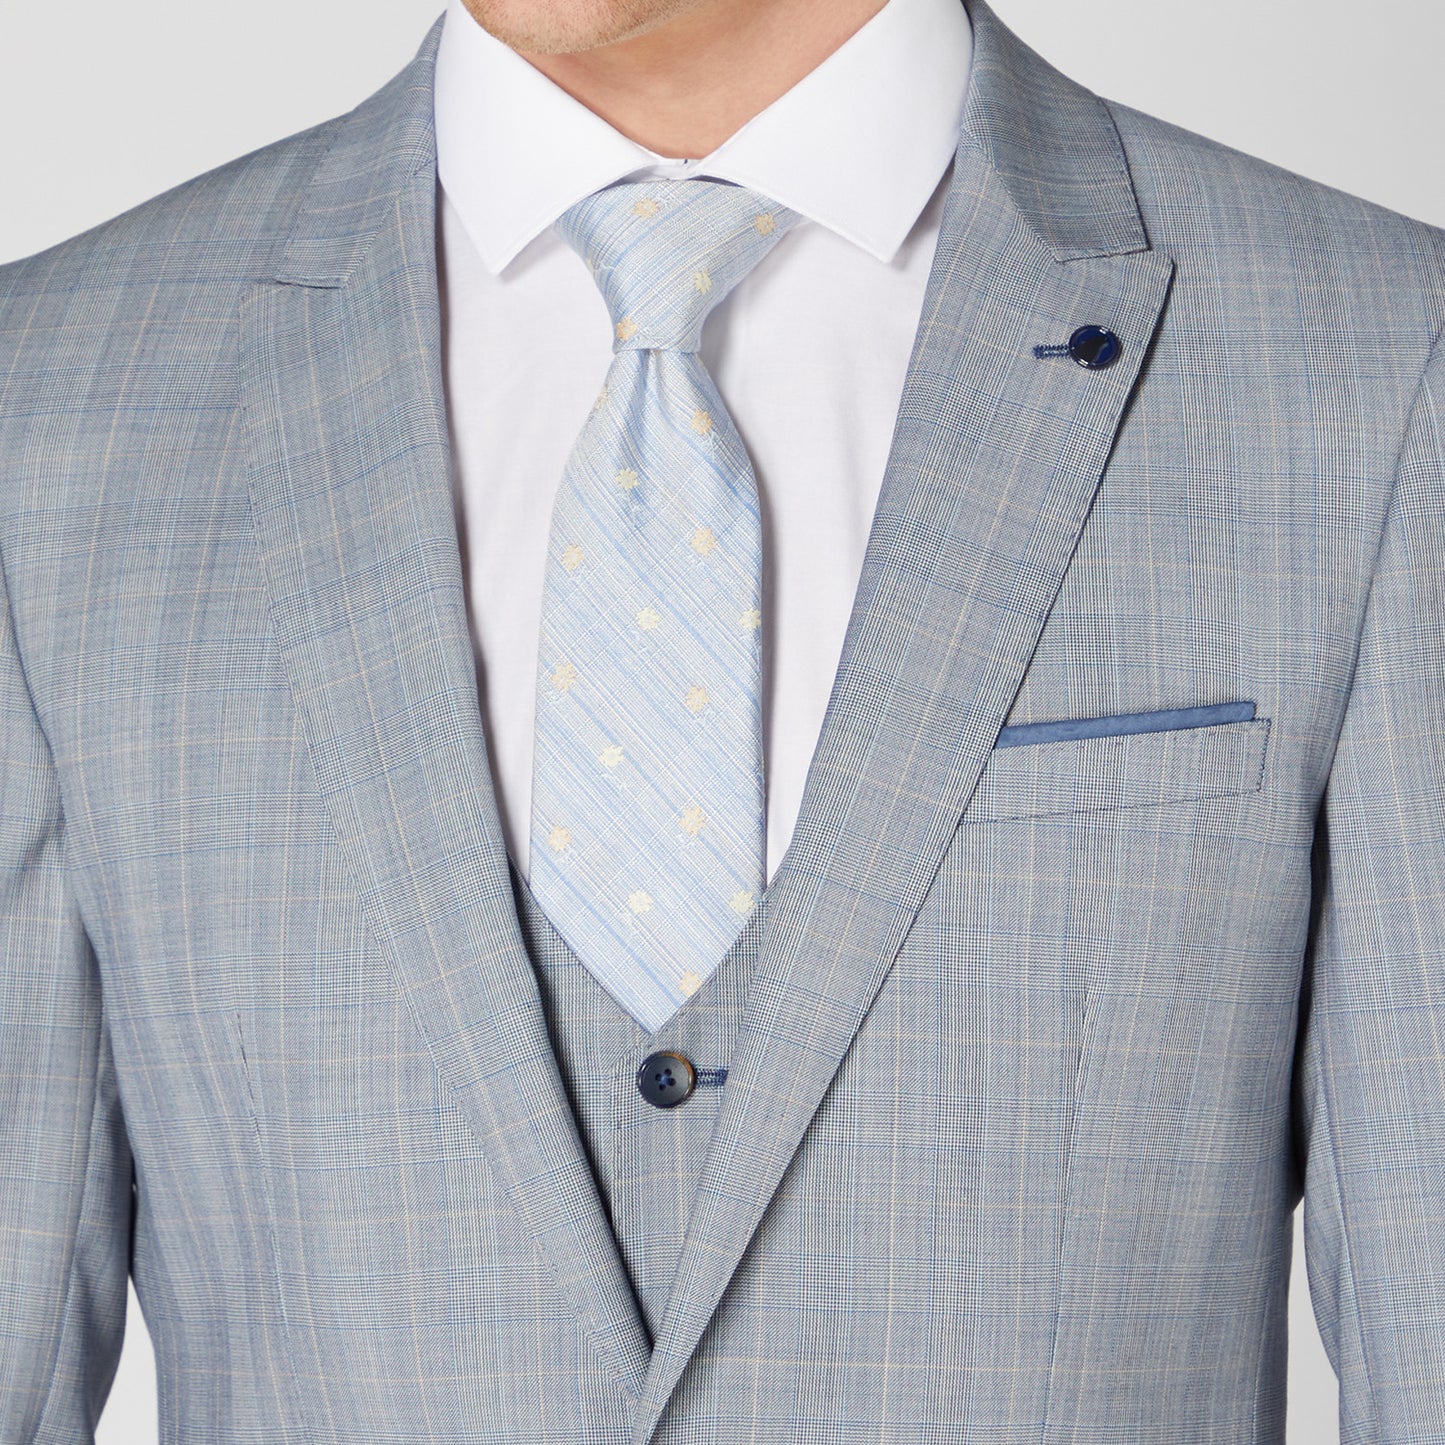 Remus Uomo 42008 22 Light Blue/Grey X-Slim Suit Jacket